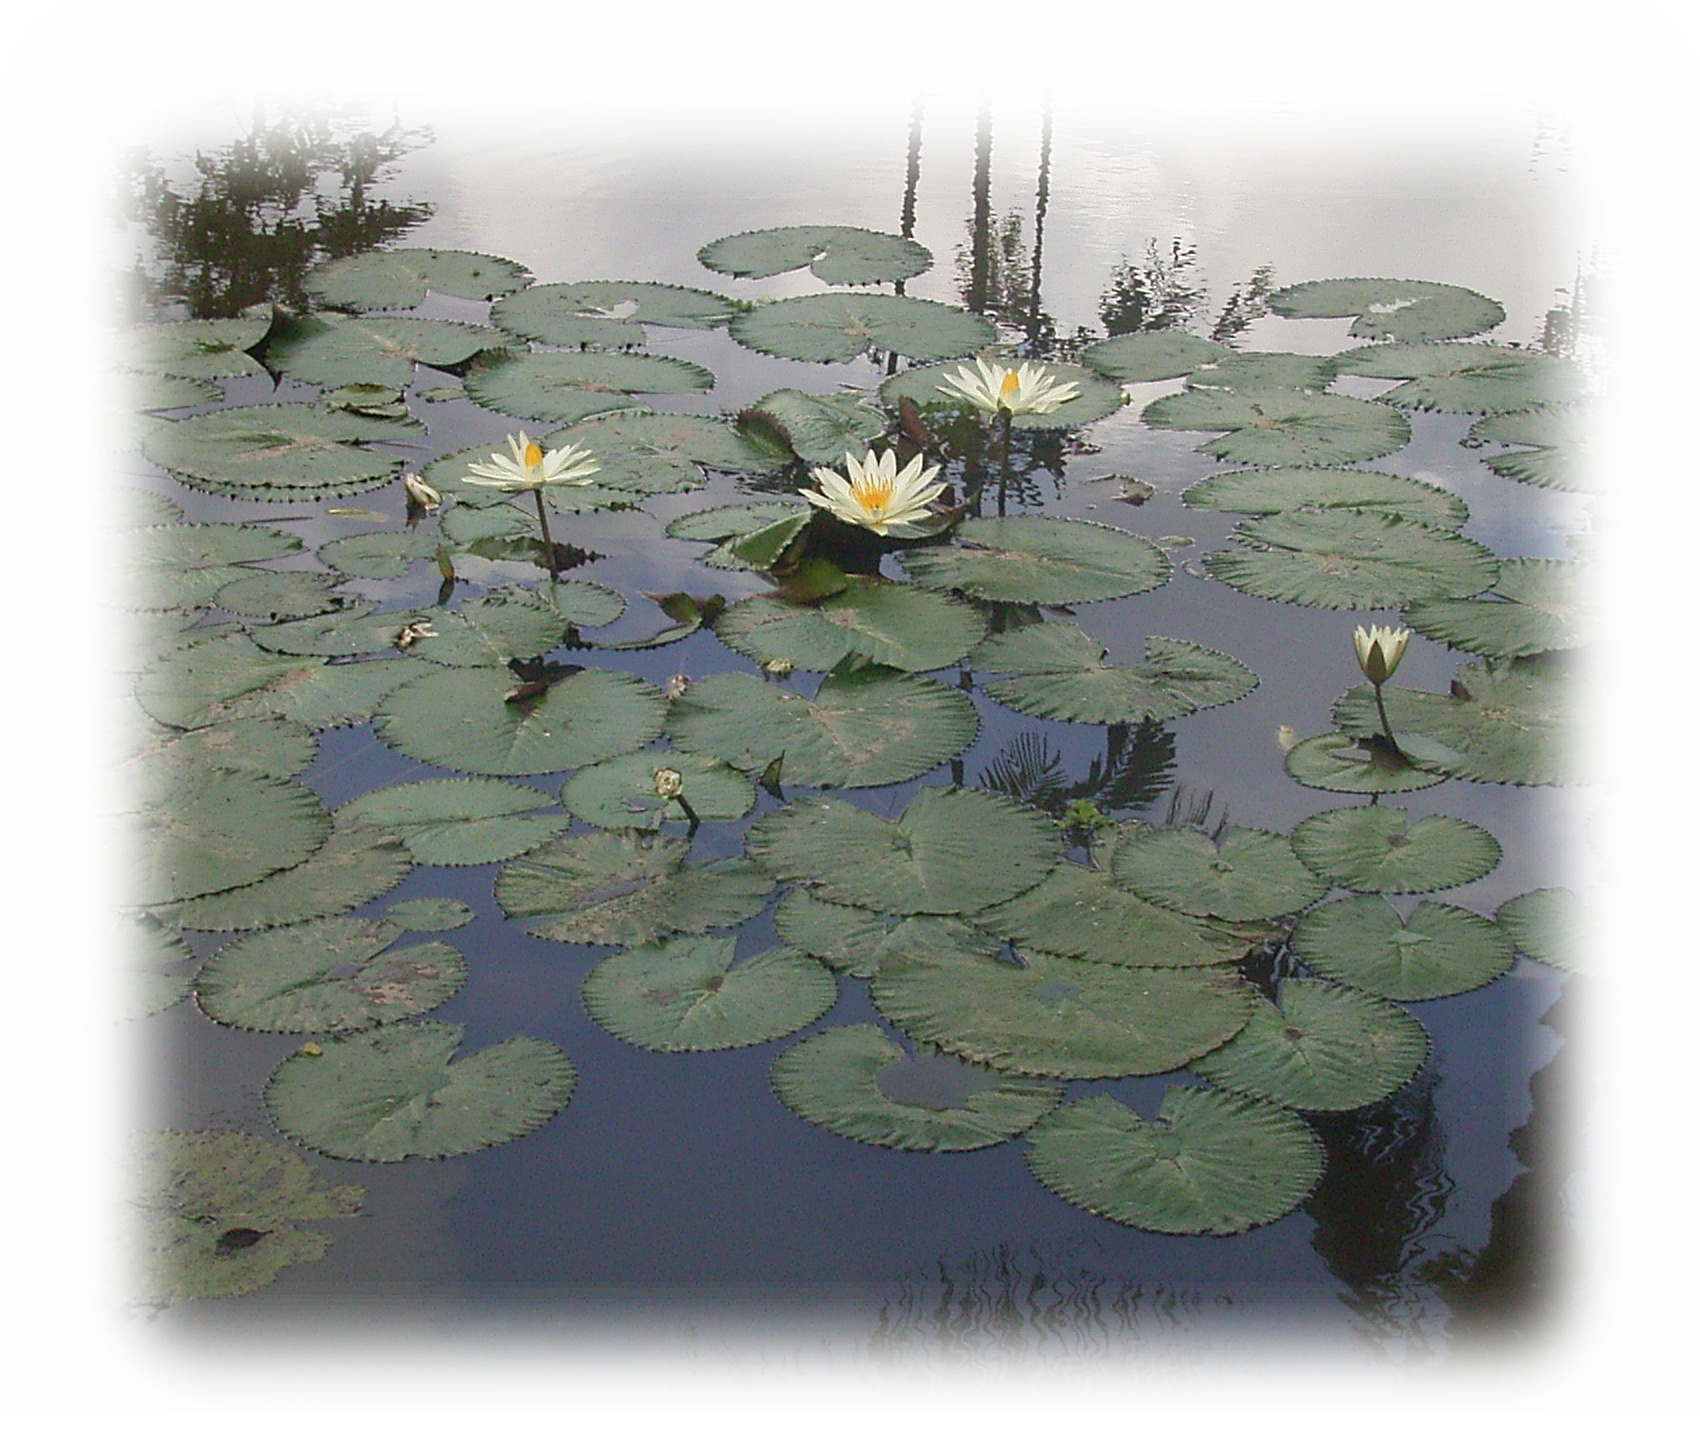 Arma Resort Hotel of Ubud, Bali: Water lilies in the bathing pond